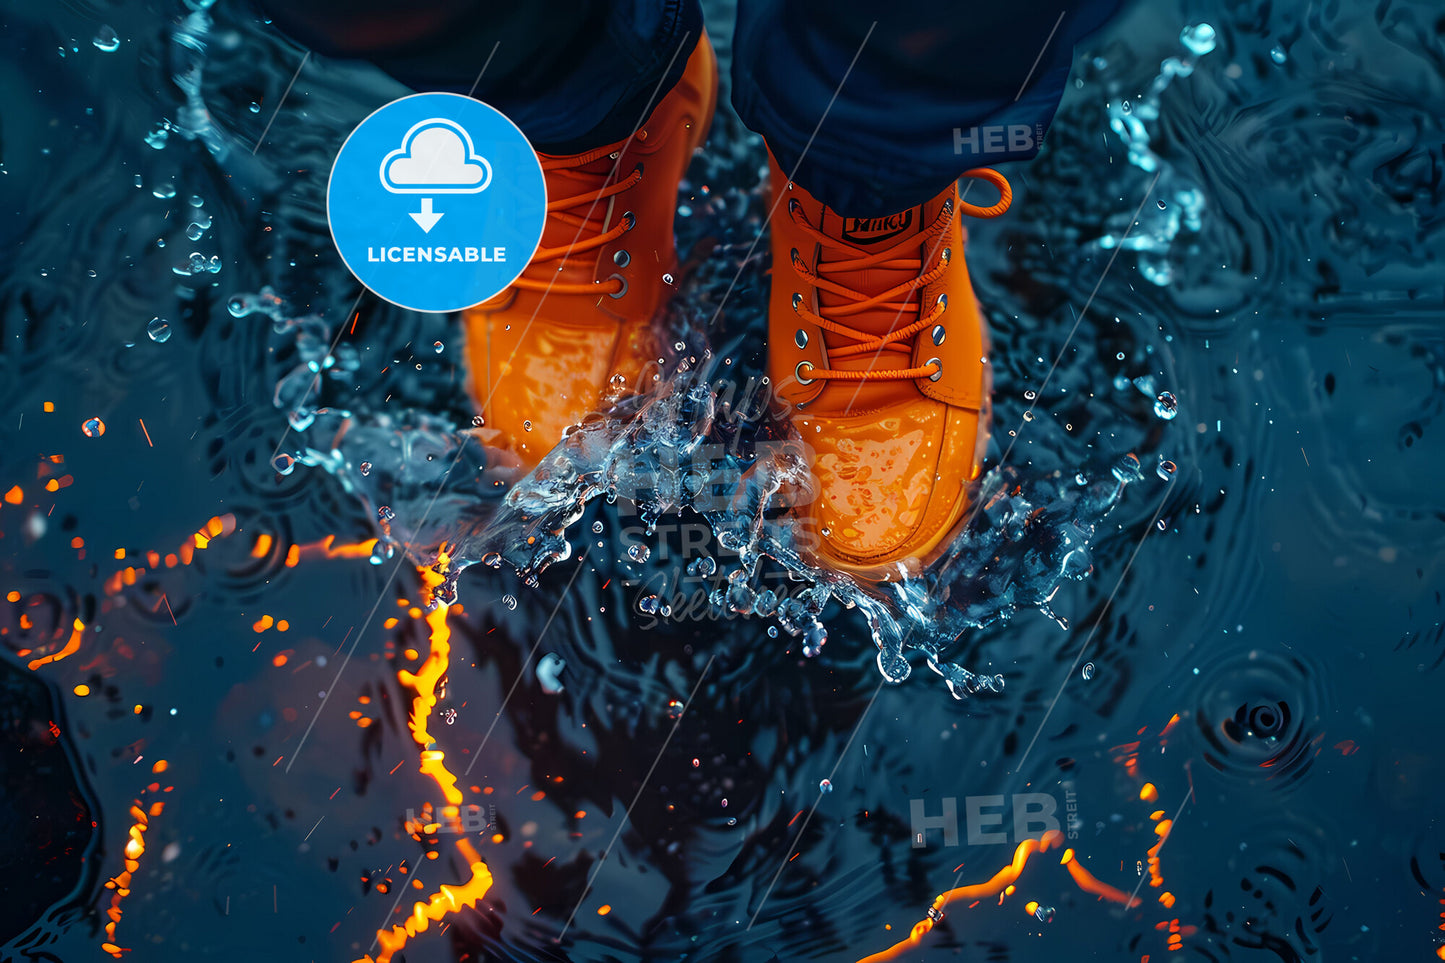 Glowing Orange Sneakers Splashing Through Puddle, Painting, Art, Orange Blue Contrast, Feet In Water